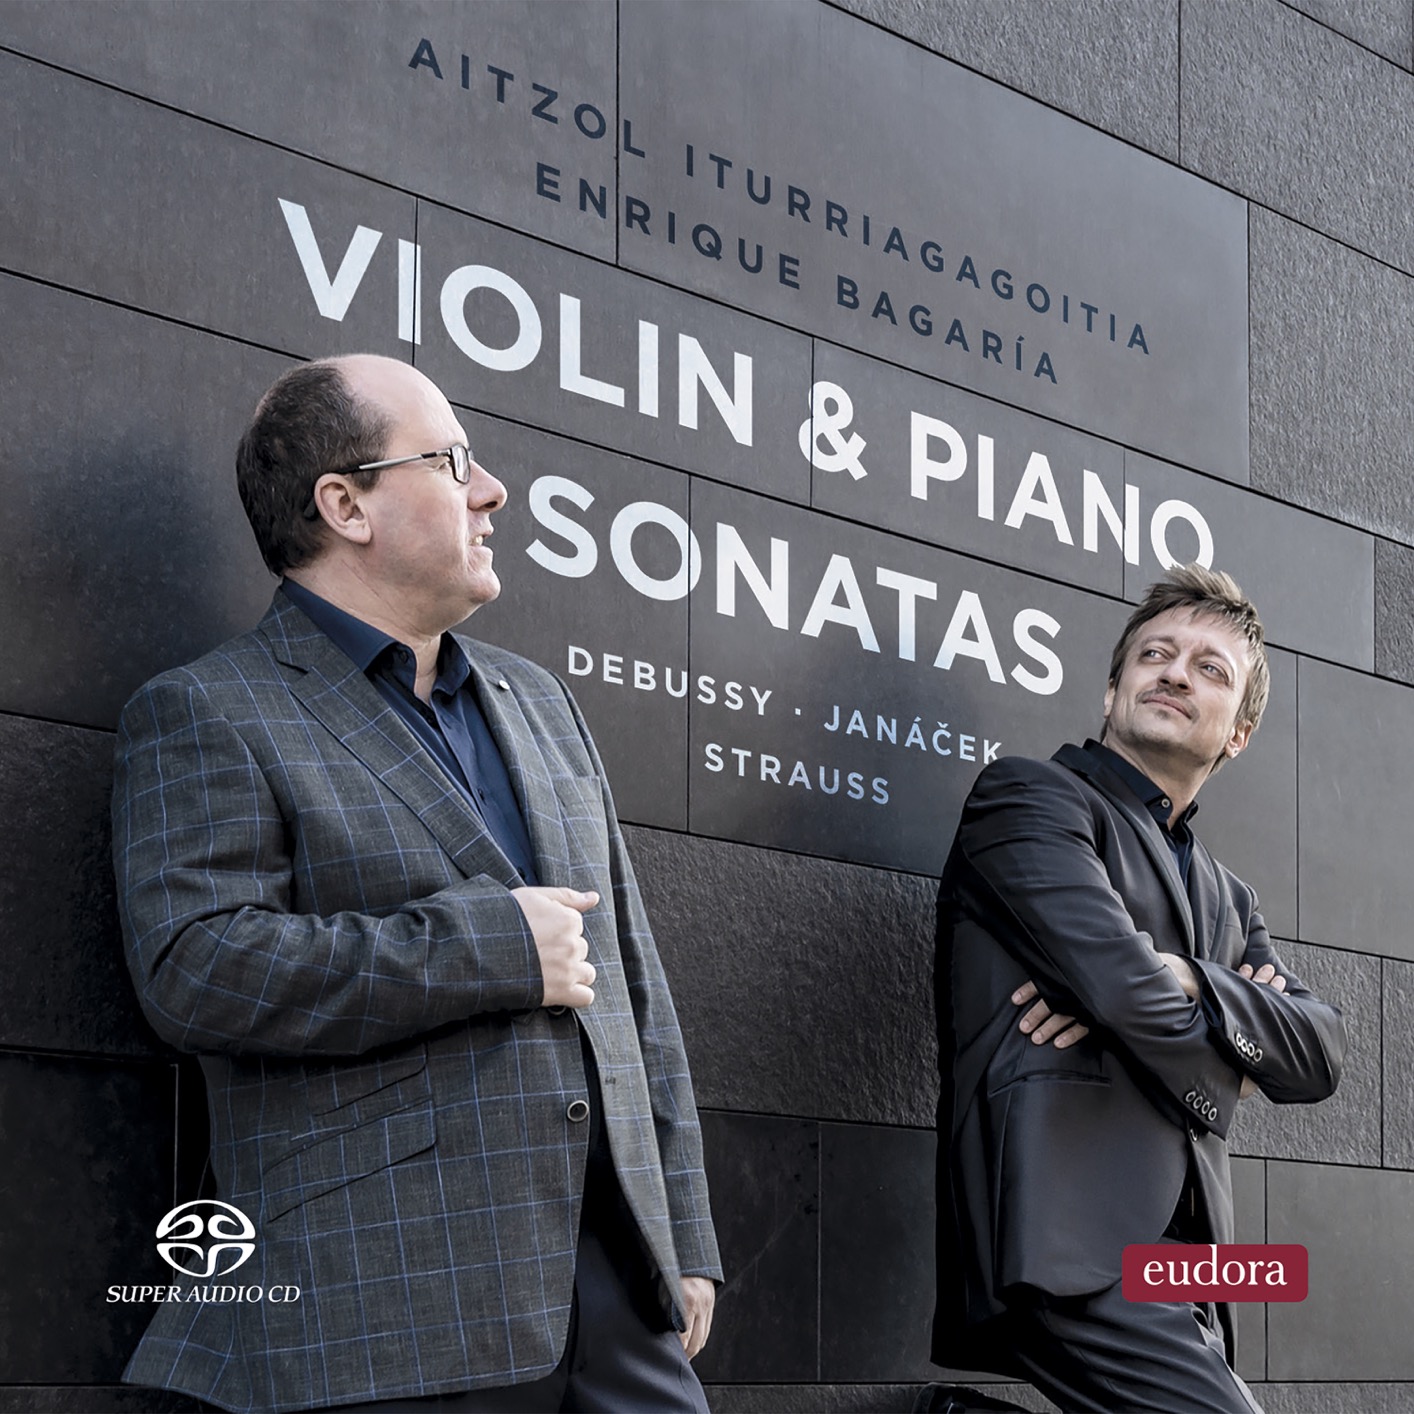 Aitzol Iturriagagoitia & Enrique Bagaria - Debussy, Janacek, Strauss: Violin & Piano Sonatas (2019) [FLAC 24bit/192kHz]